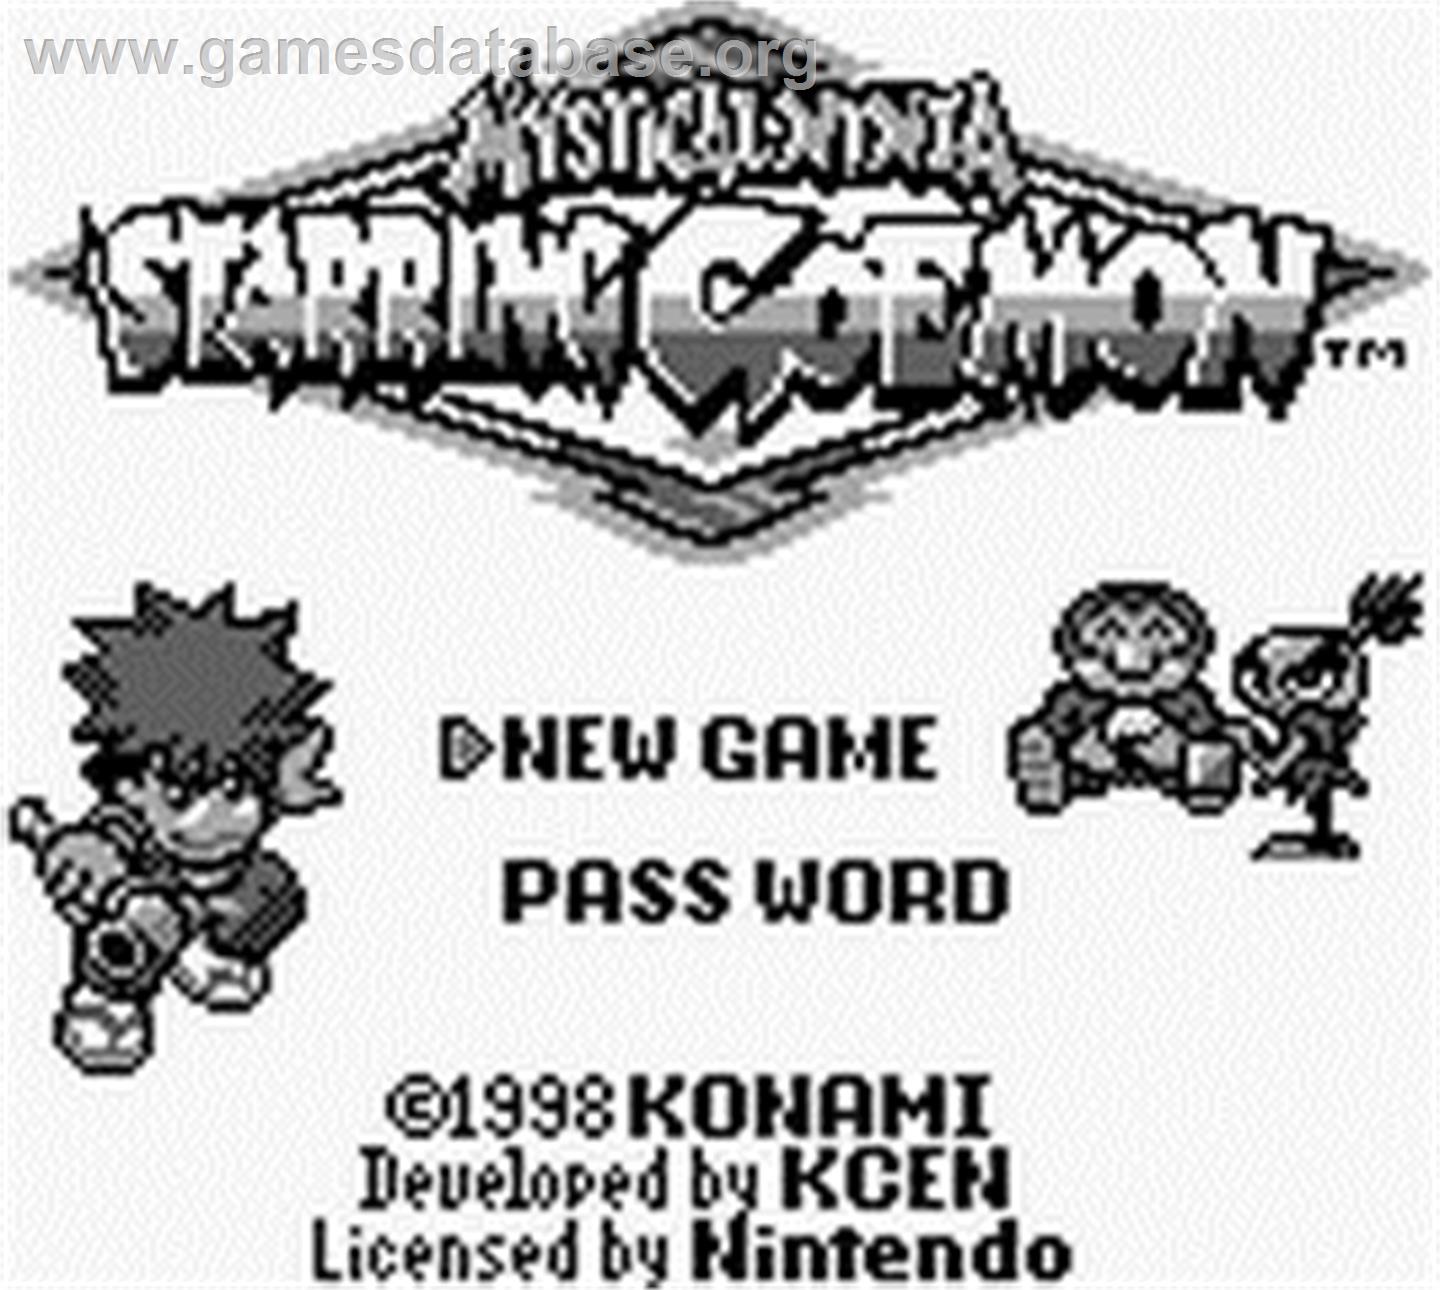 Mystical Ninja Starring Goemon - Nintendo Game Boy - Artwork - Title Screen